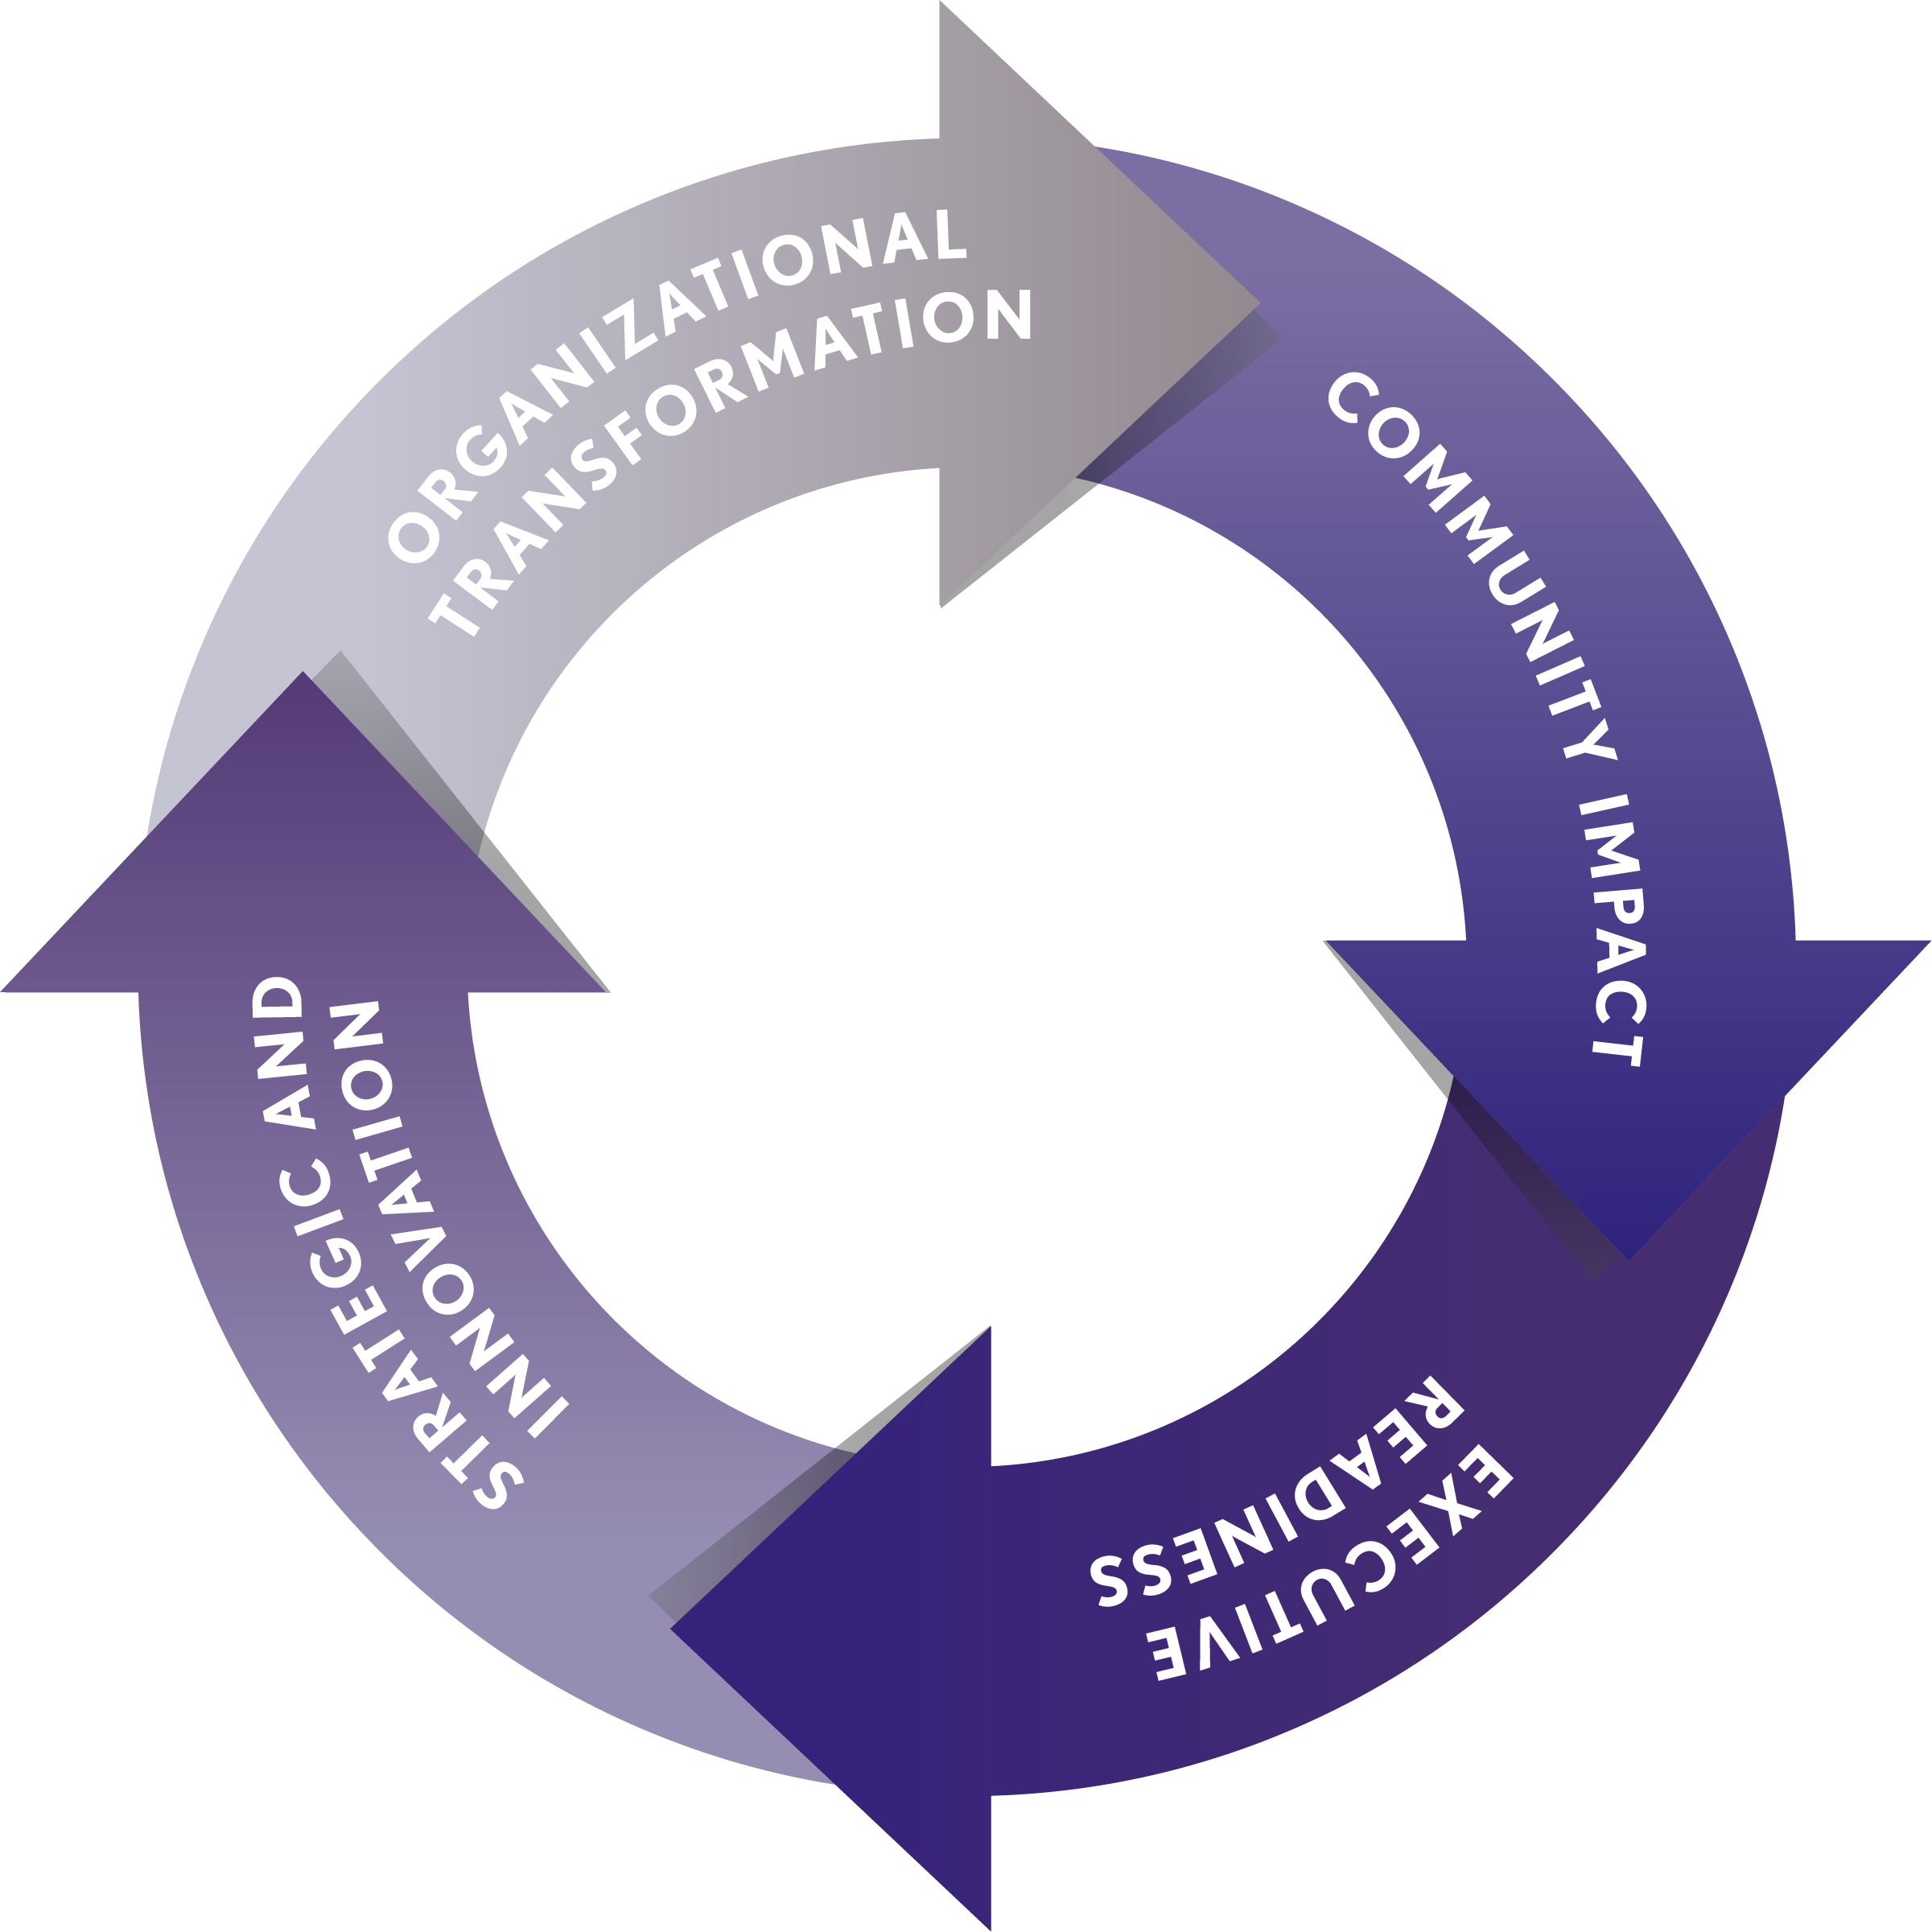 Community Impact > Executive Readiness > Strategic and Innovation > Organizational Transformation